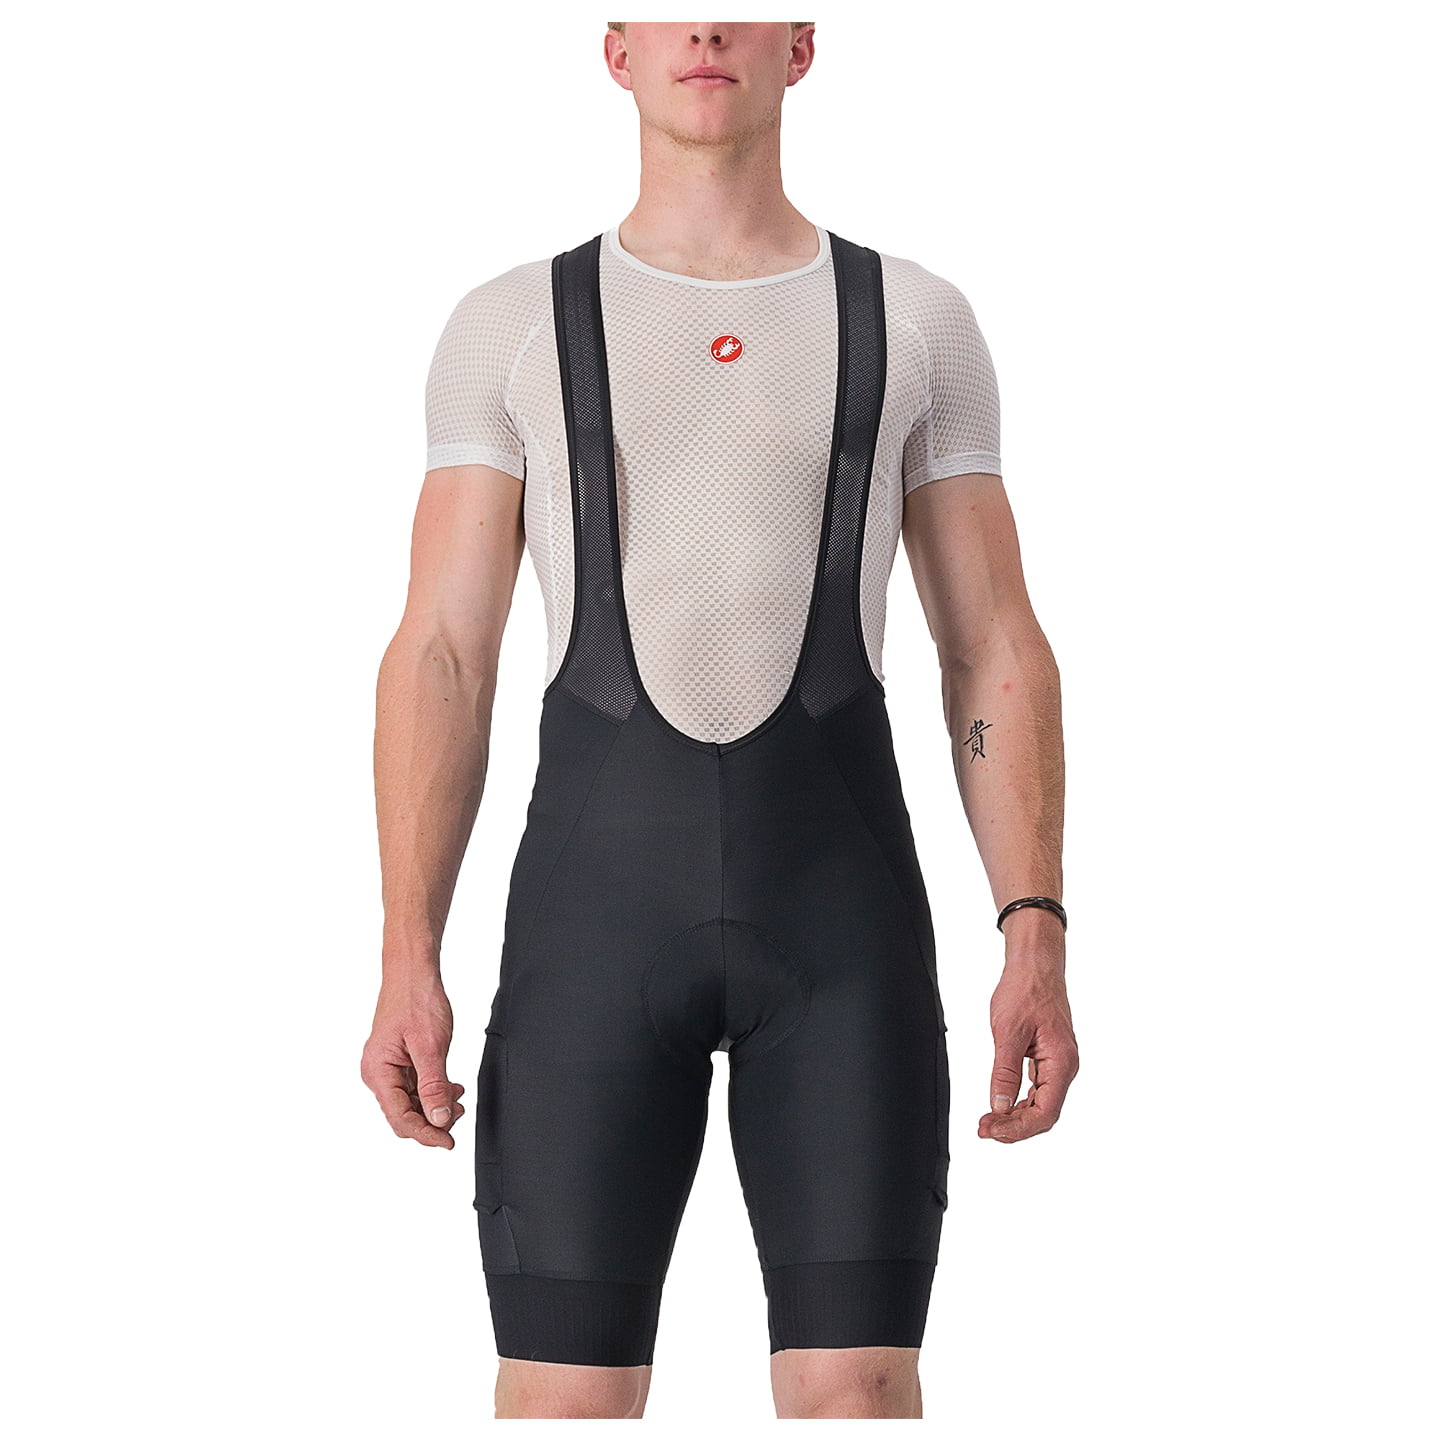 CASTELLI Cargo Unlimited Bib Shorts Bib Shorts, for men, size L, Cycle shorts, Cycling clothing